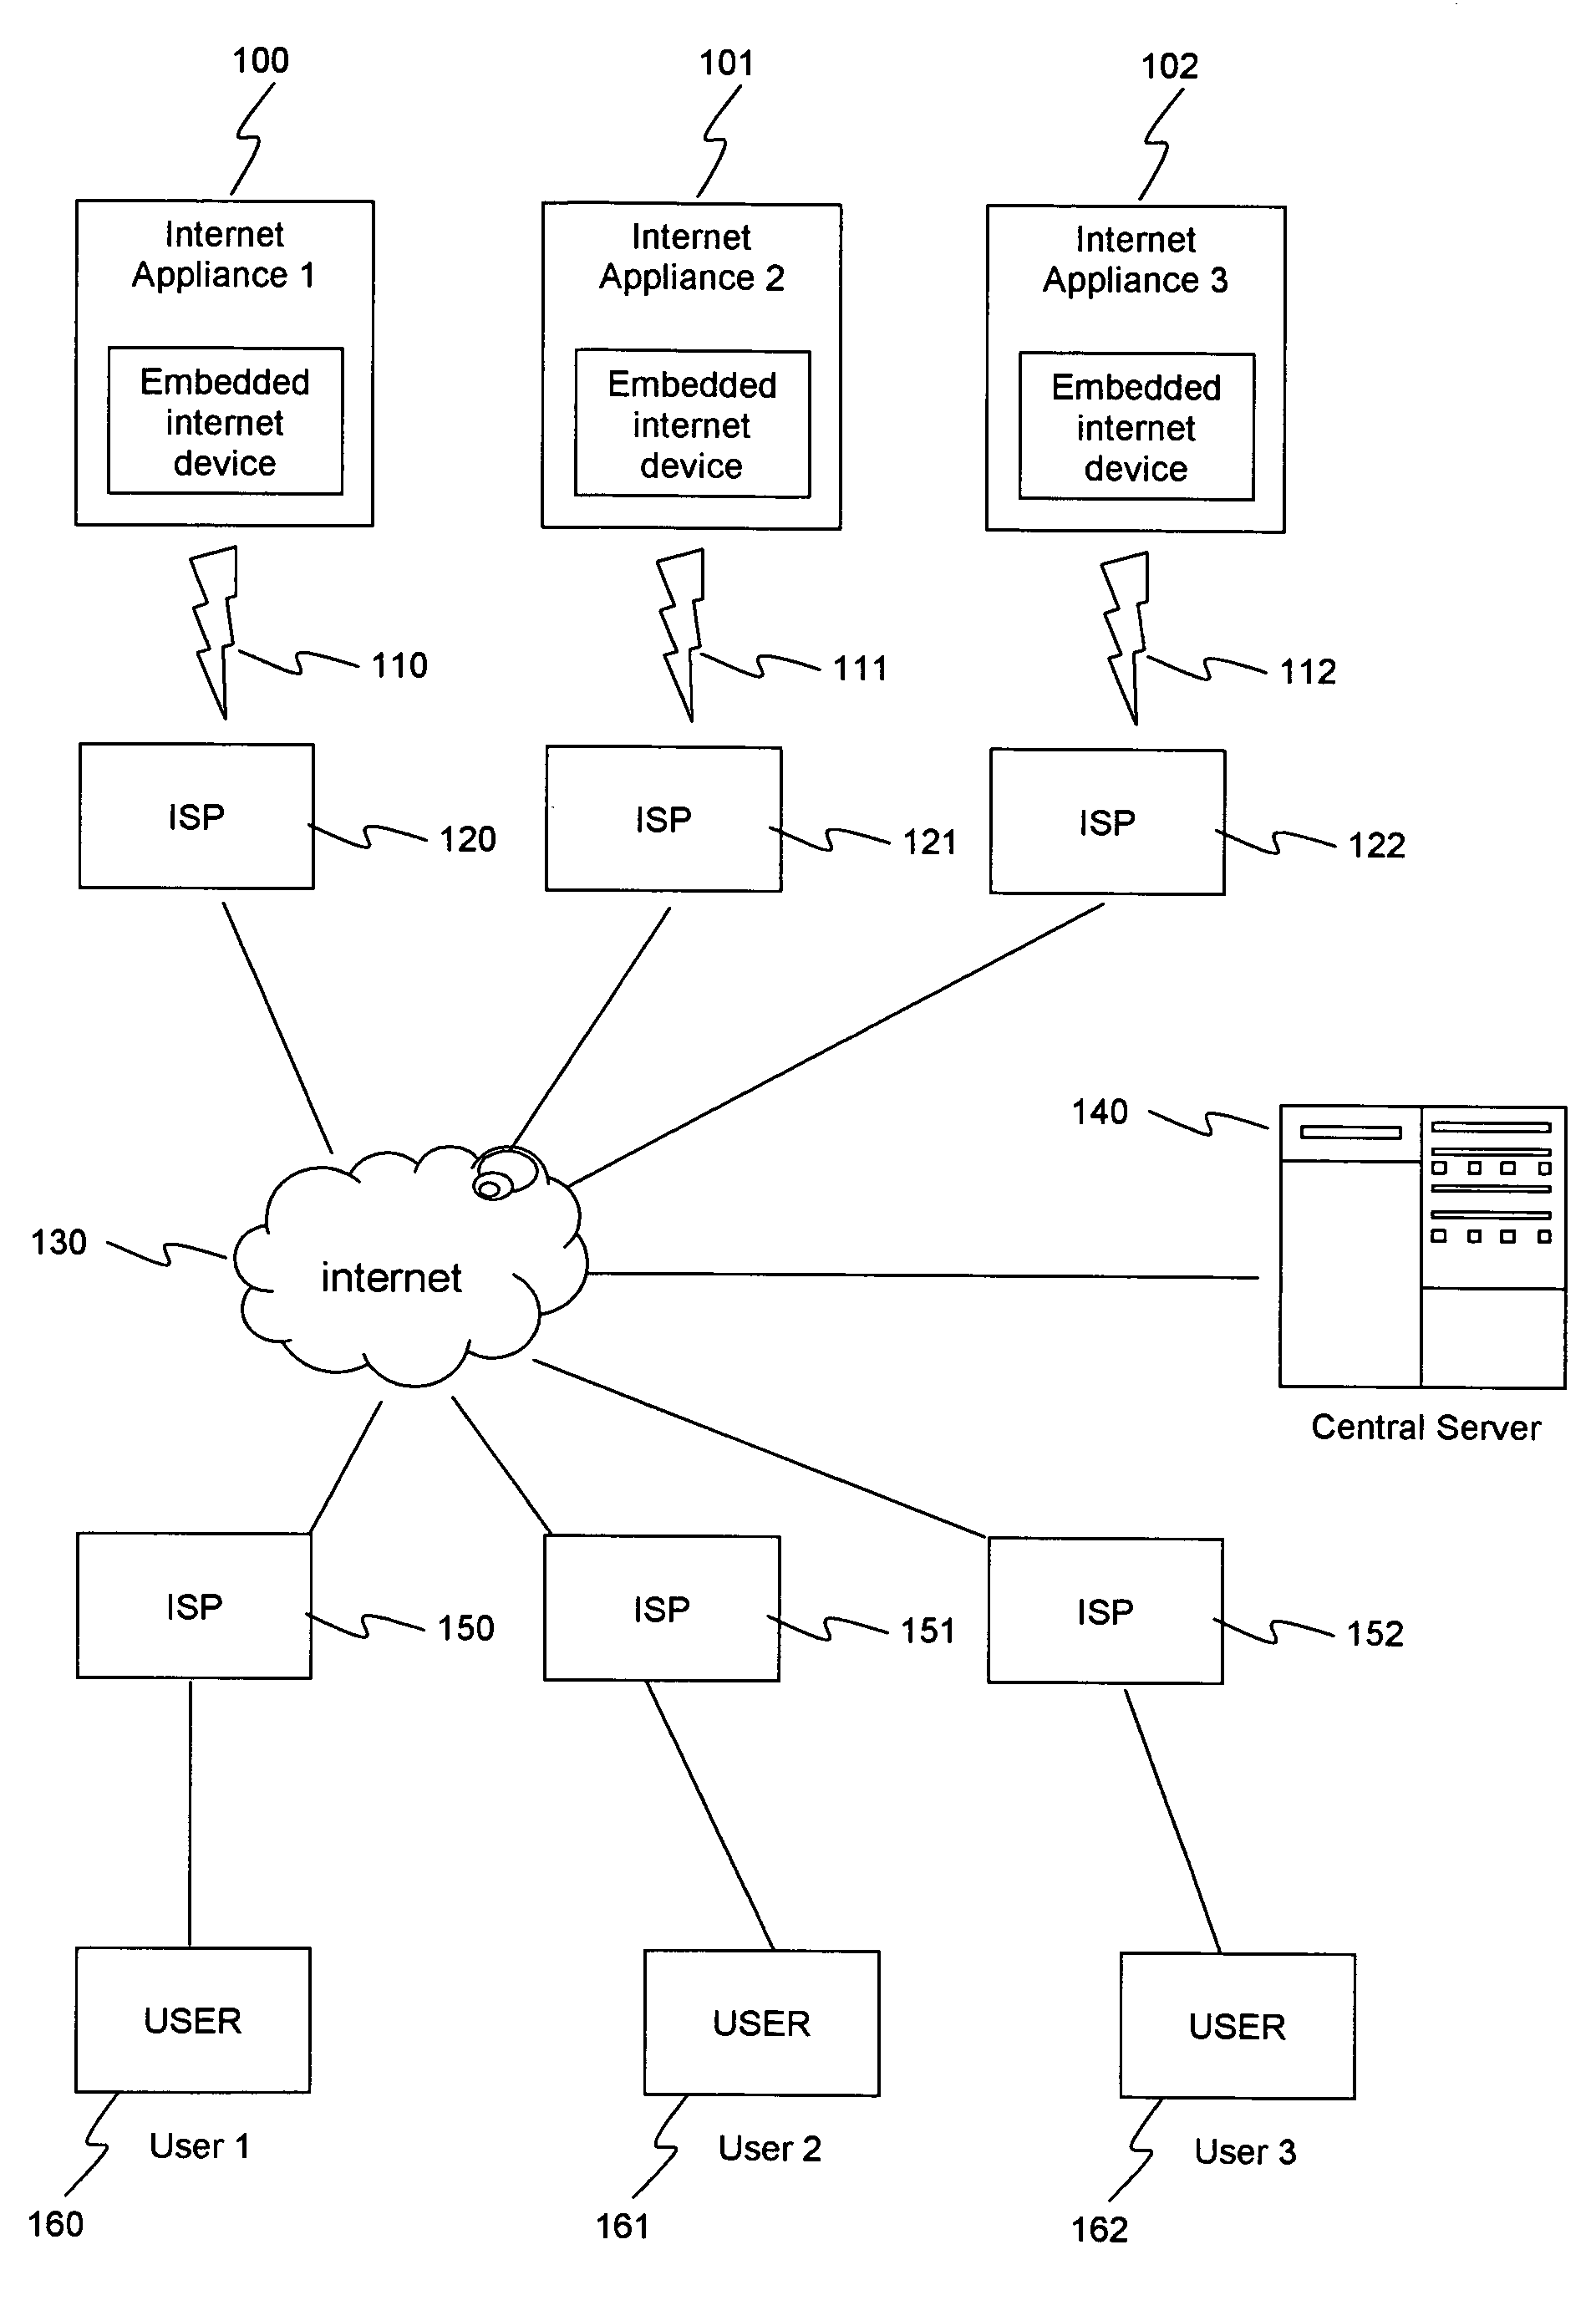 Network architecture for internet appliances